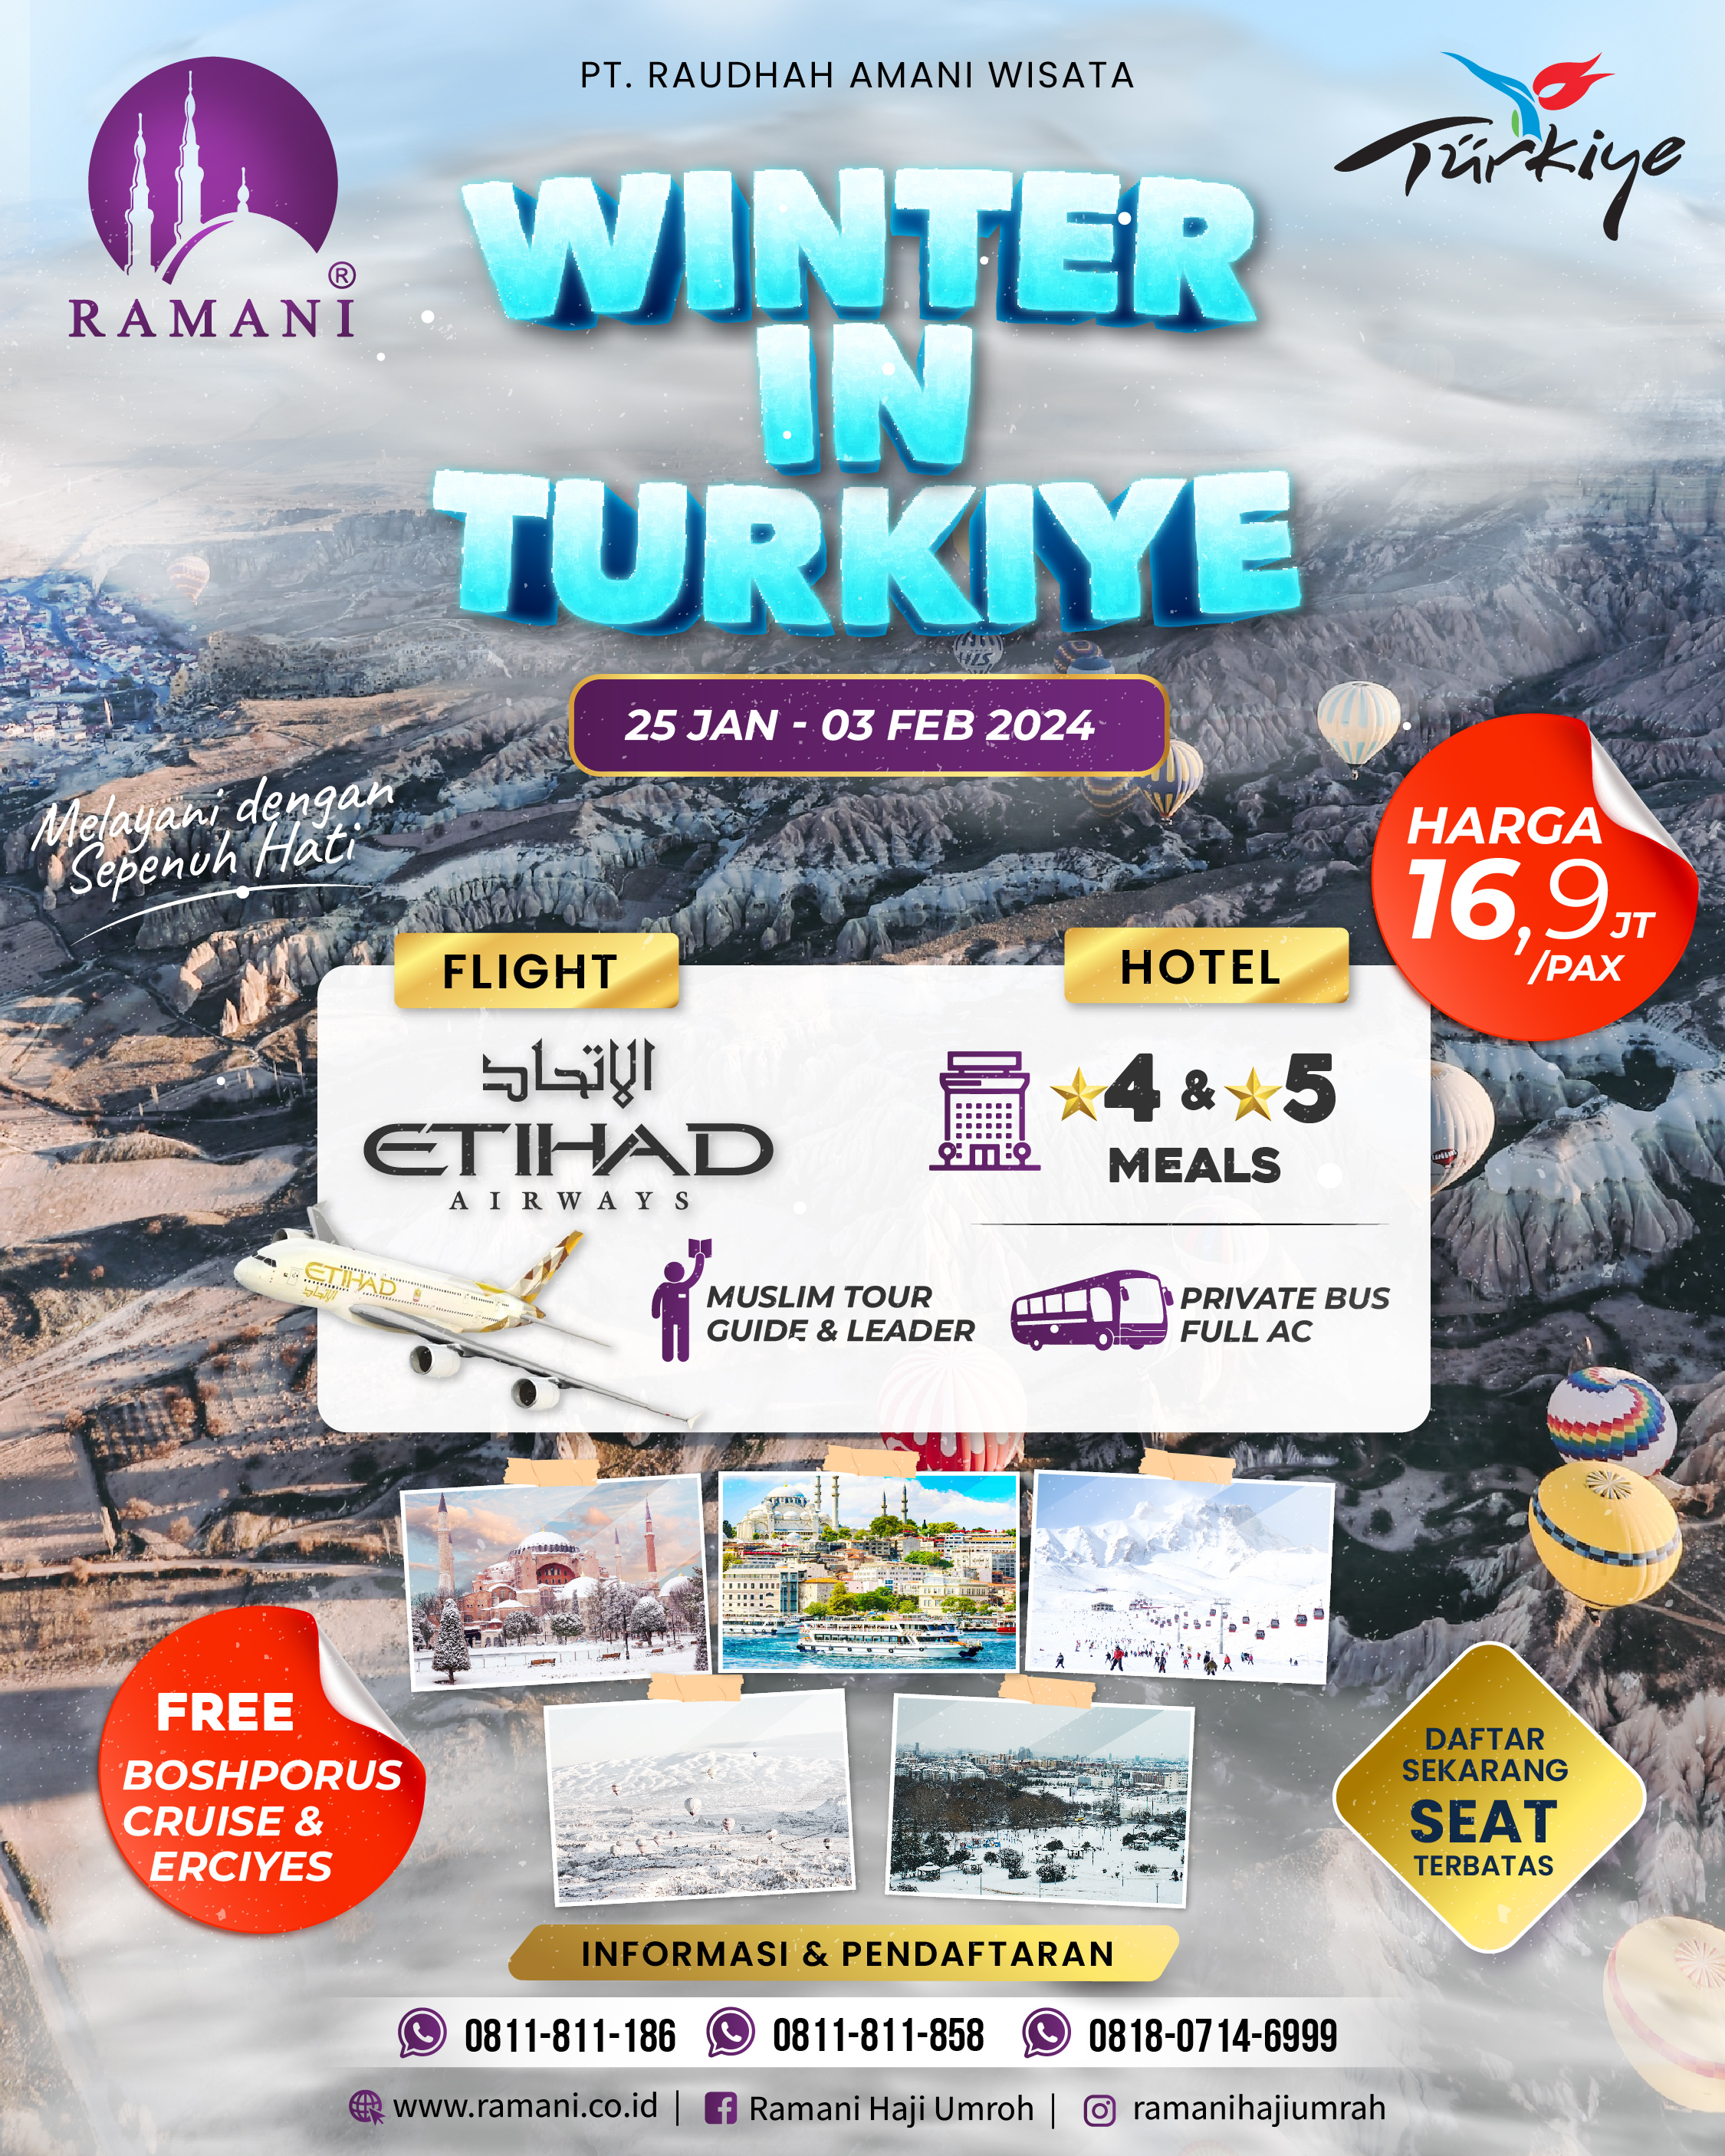 WINTER IN TURKIYE 2024